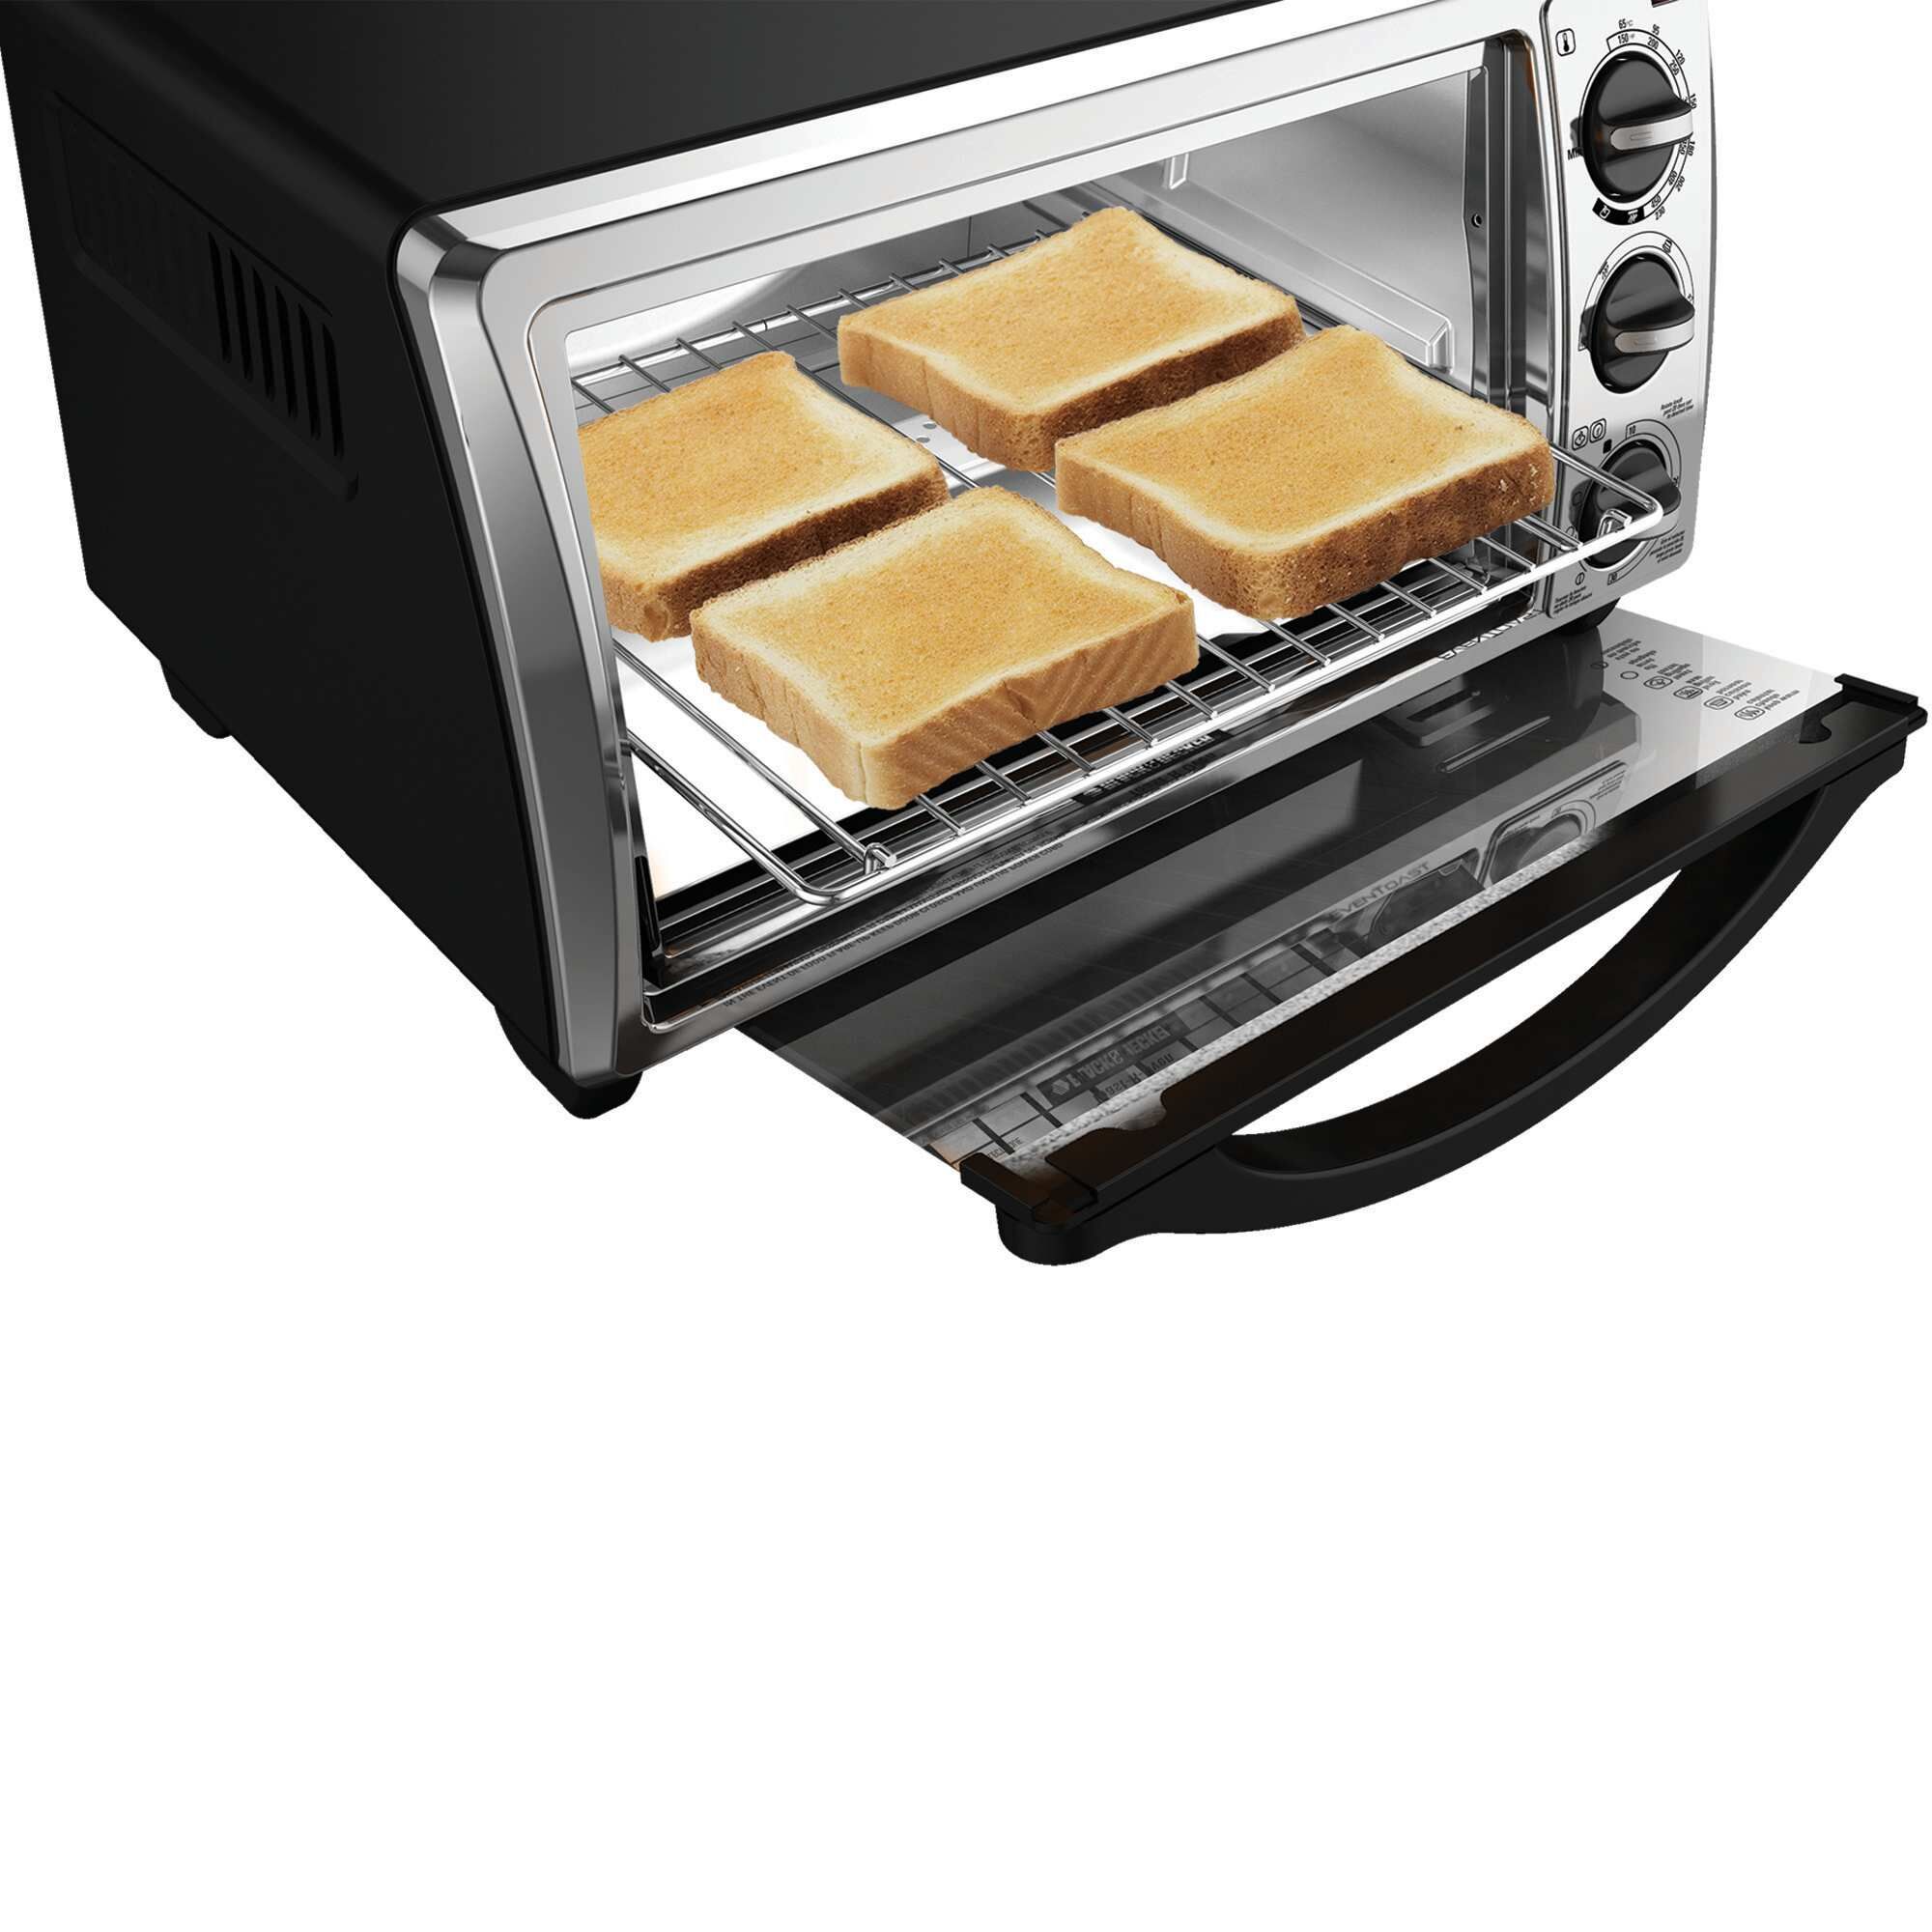 4 Slice toaster oven.